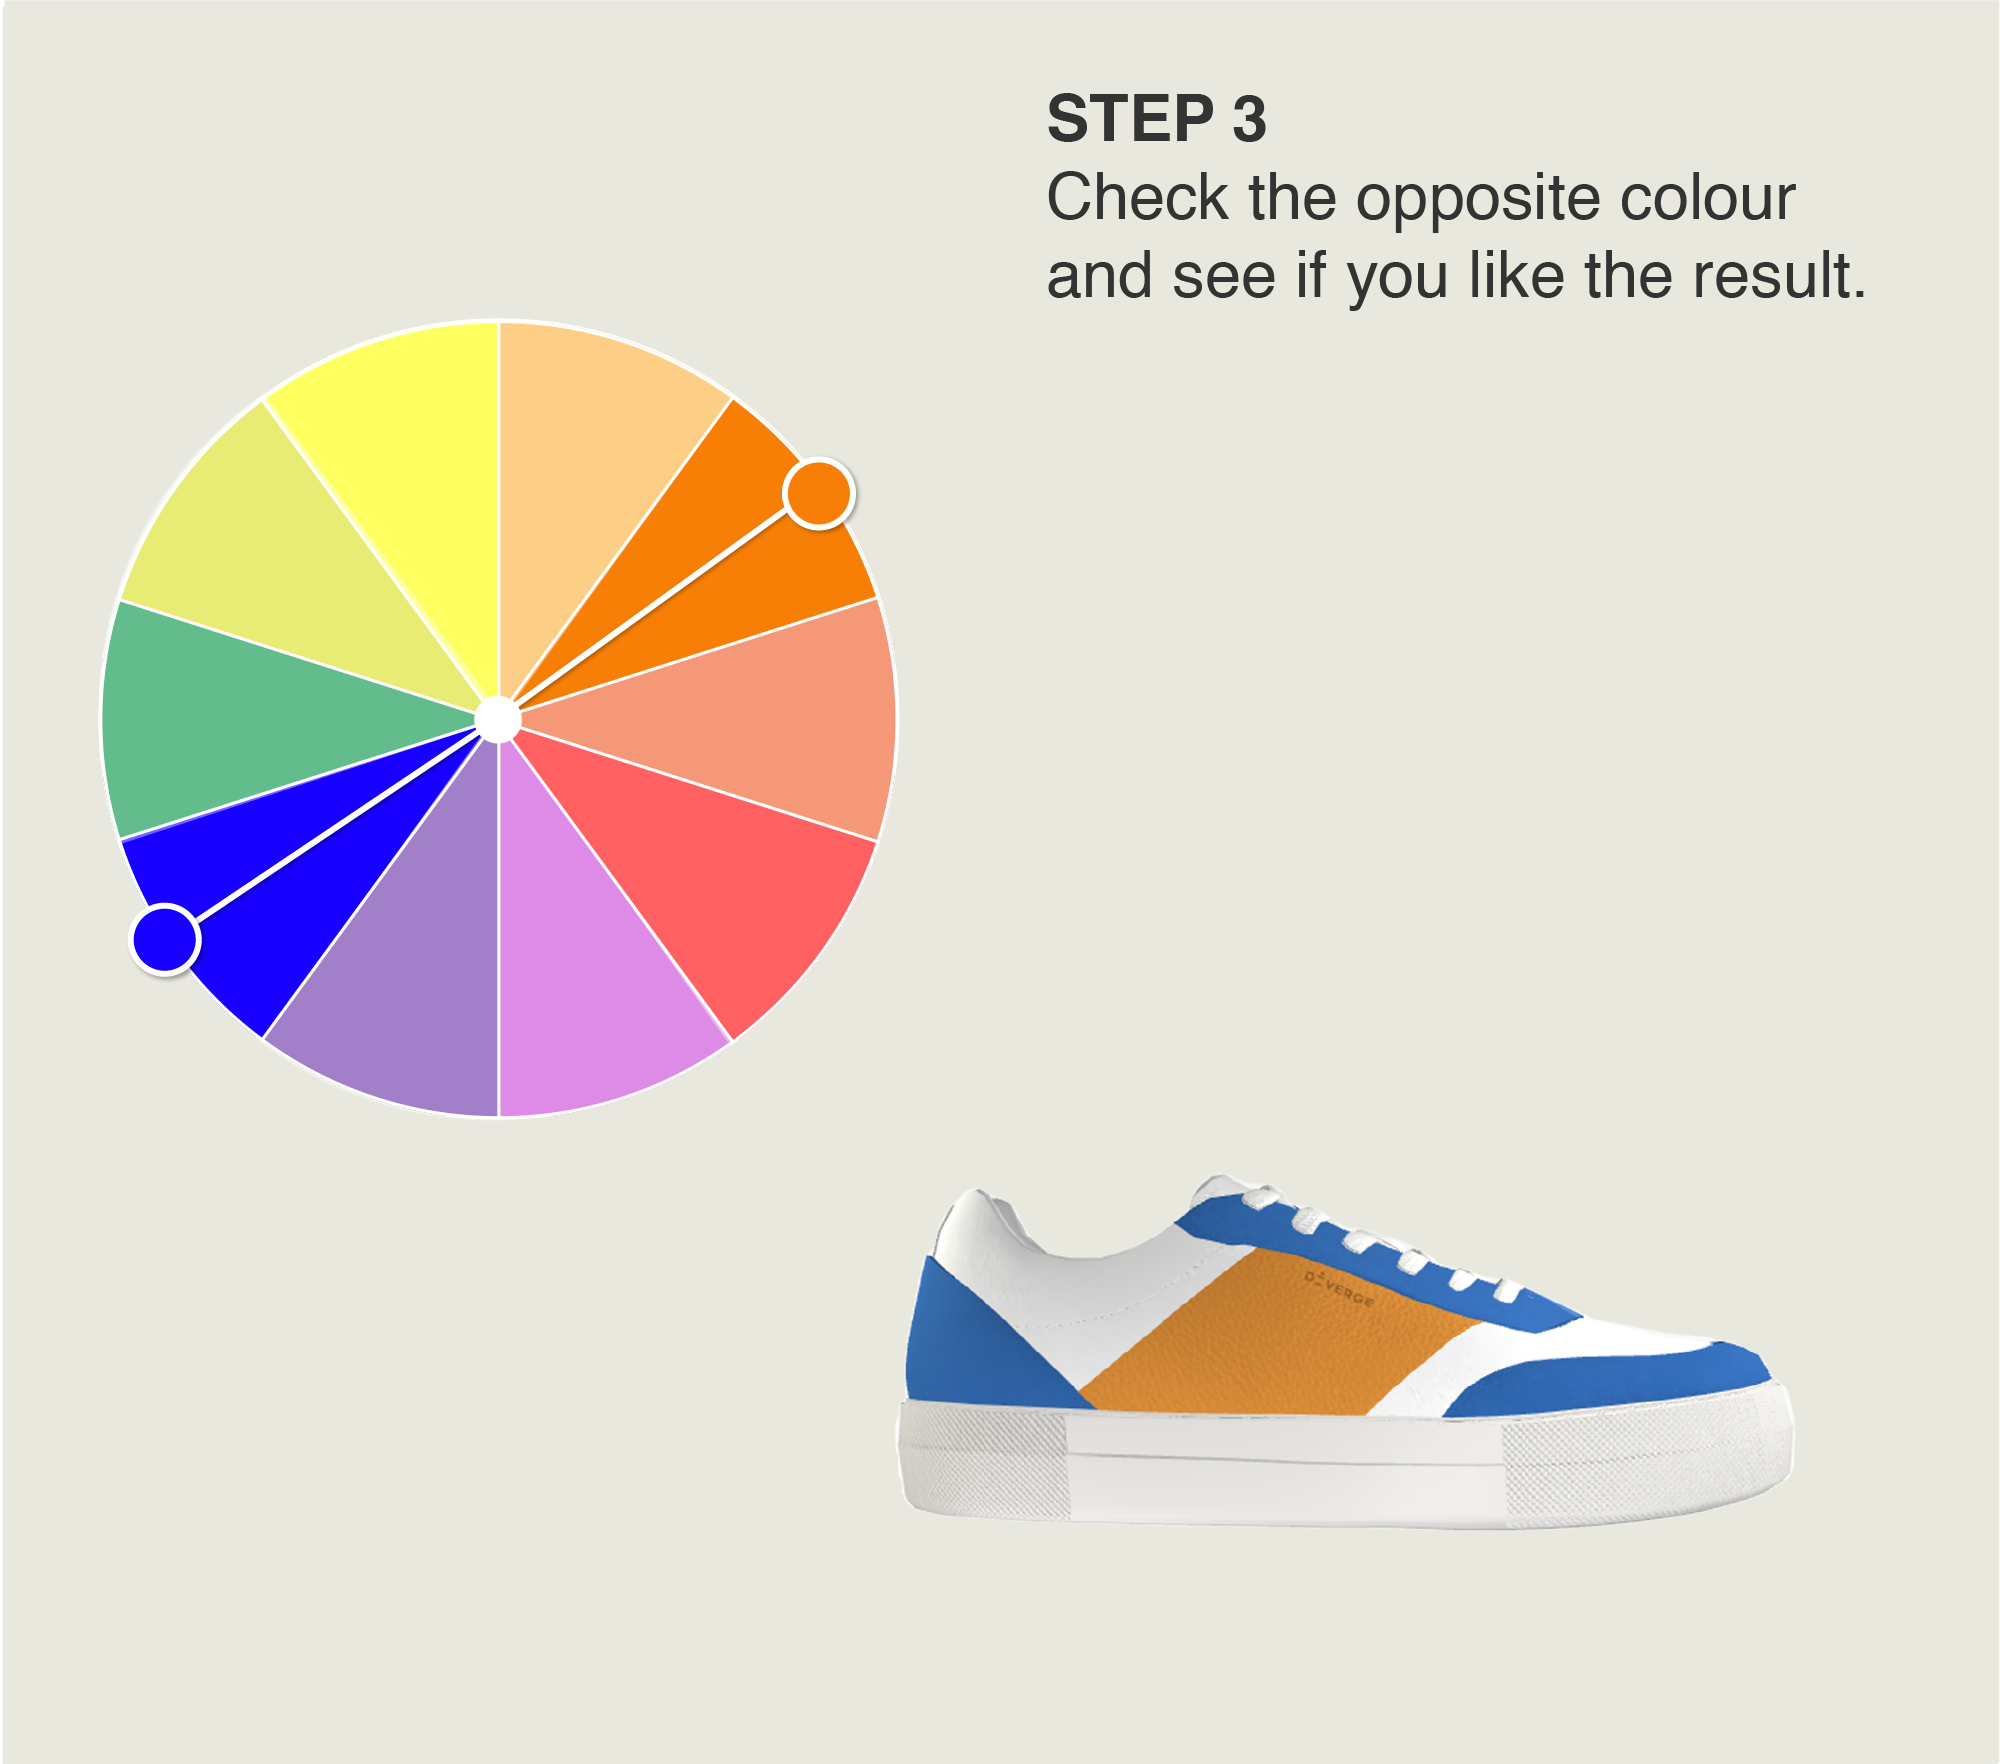 Custom shoes featuring unique designs and vibrant colors.